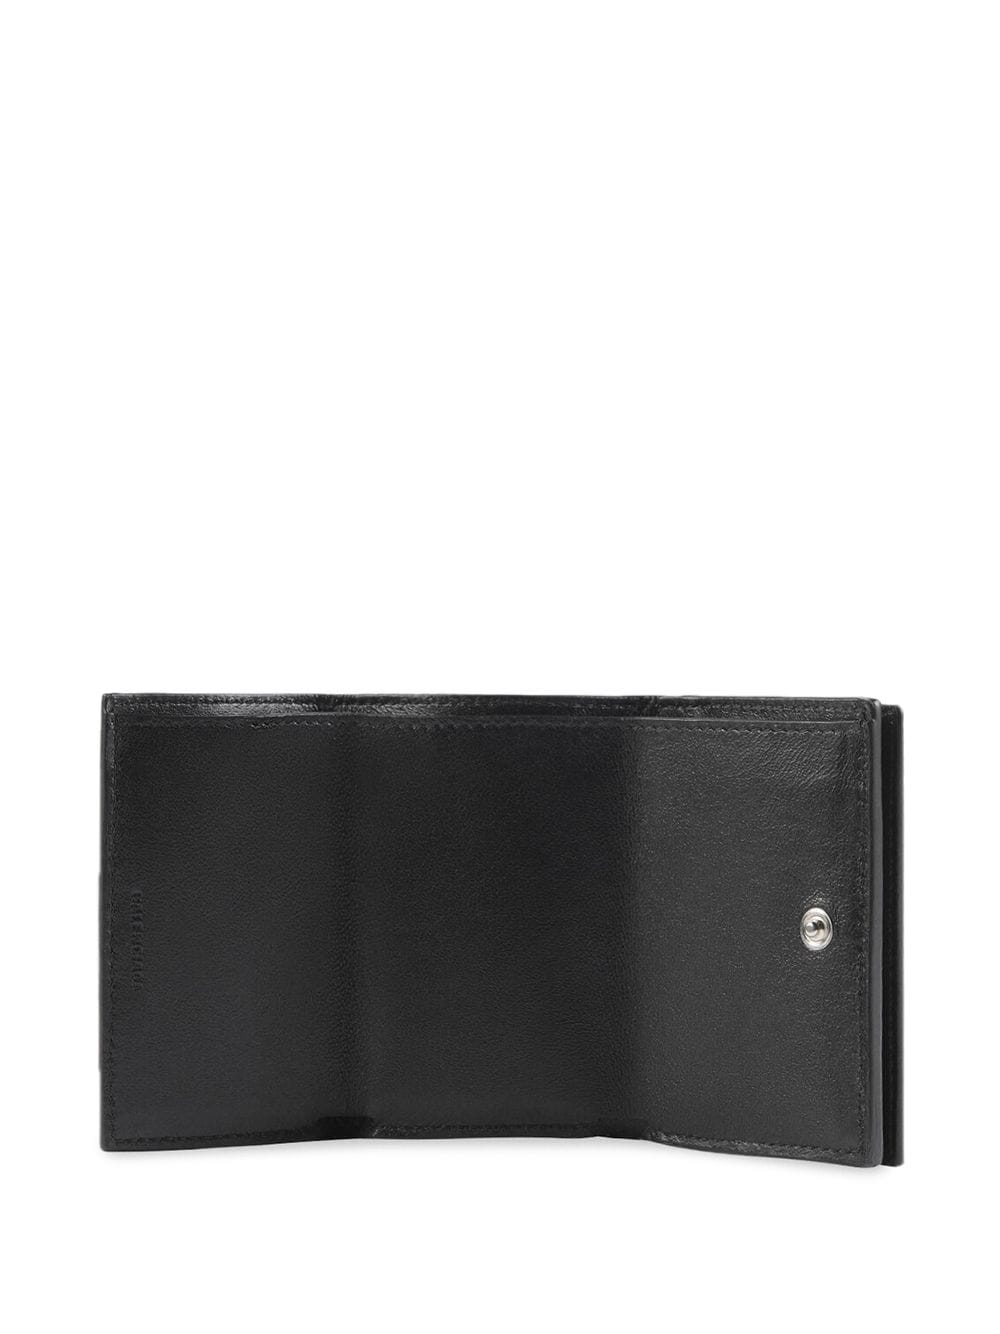 фото Balenciaga мини-кошелек с логотипом